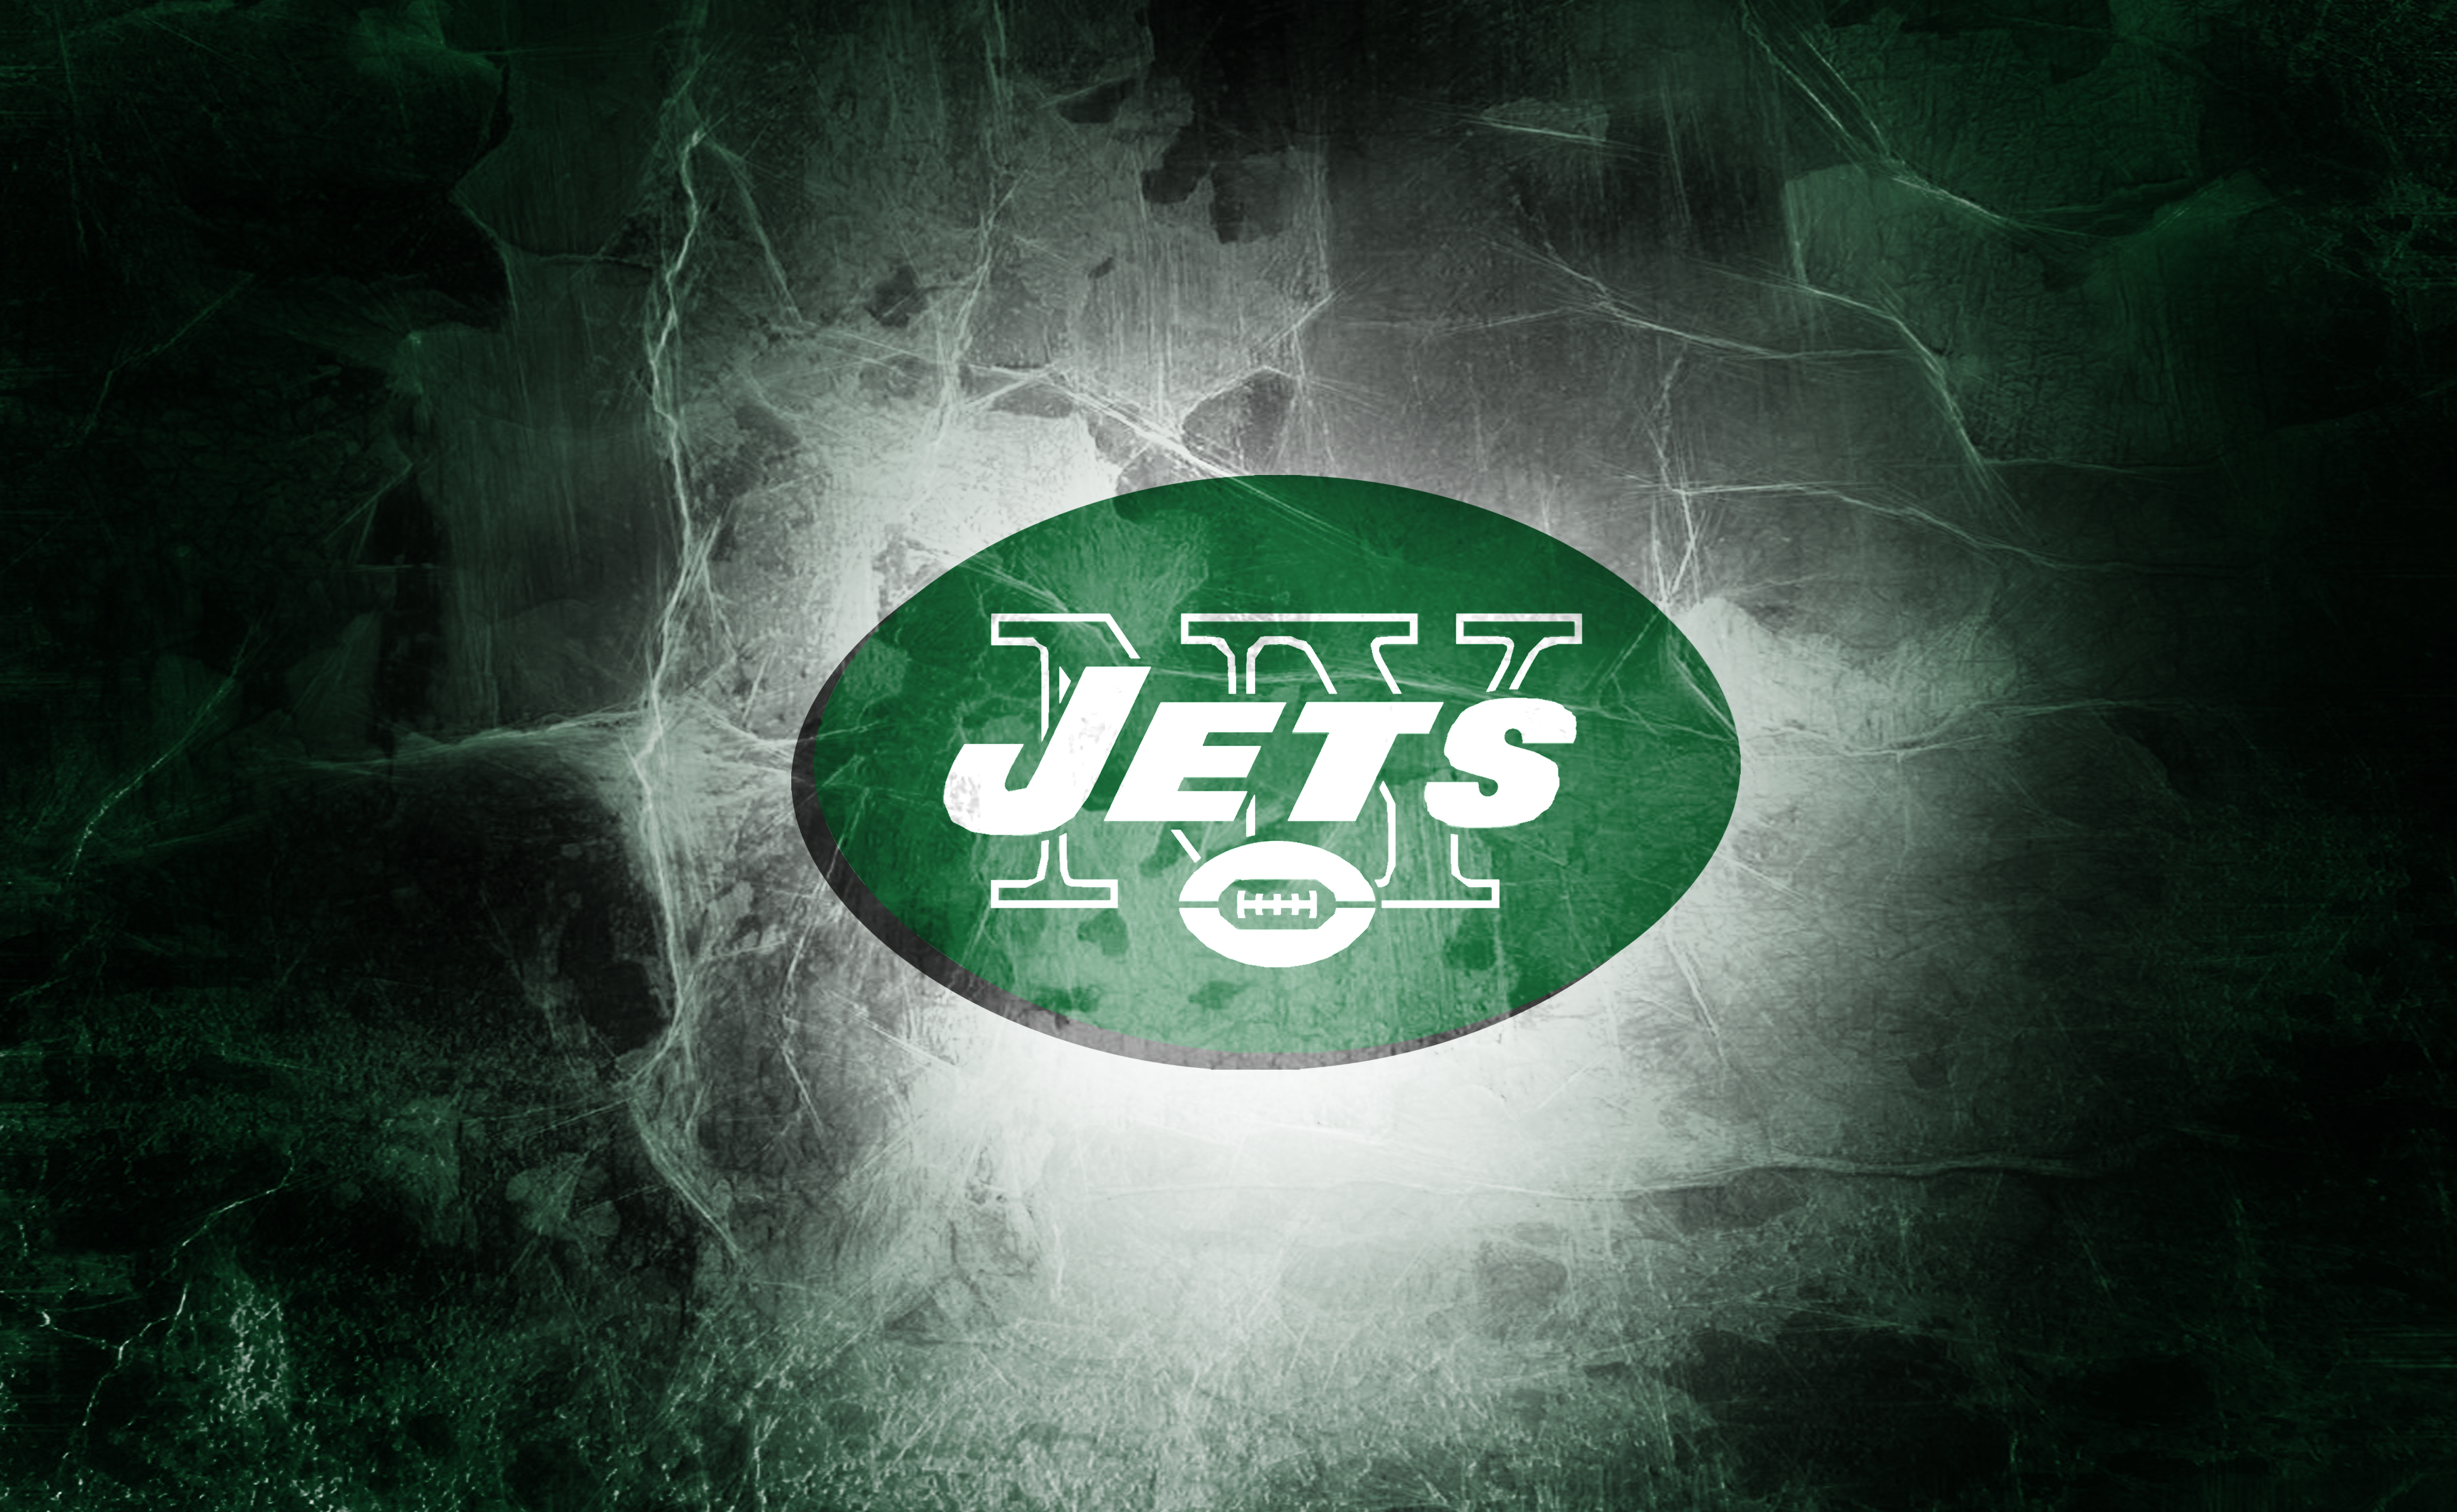 Free New York Jets desktop image New York Jets wallpapers